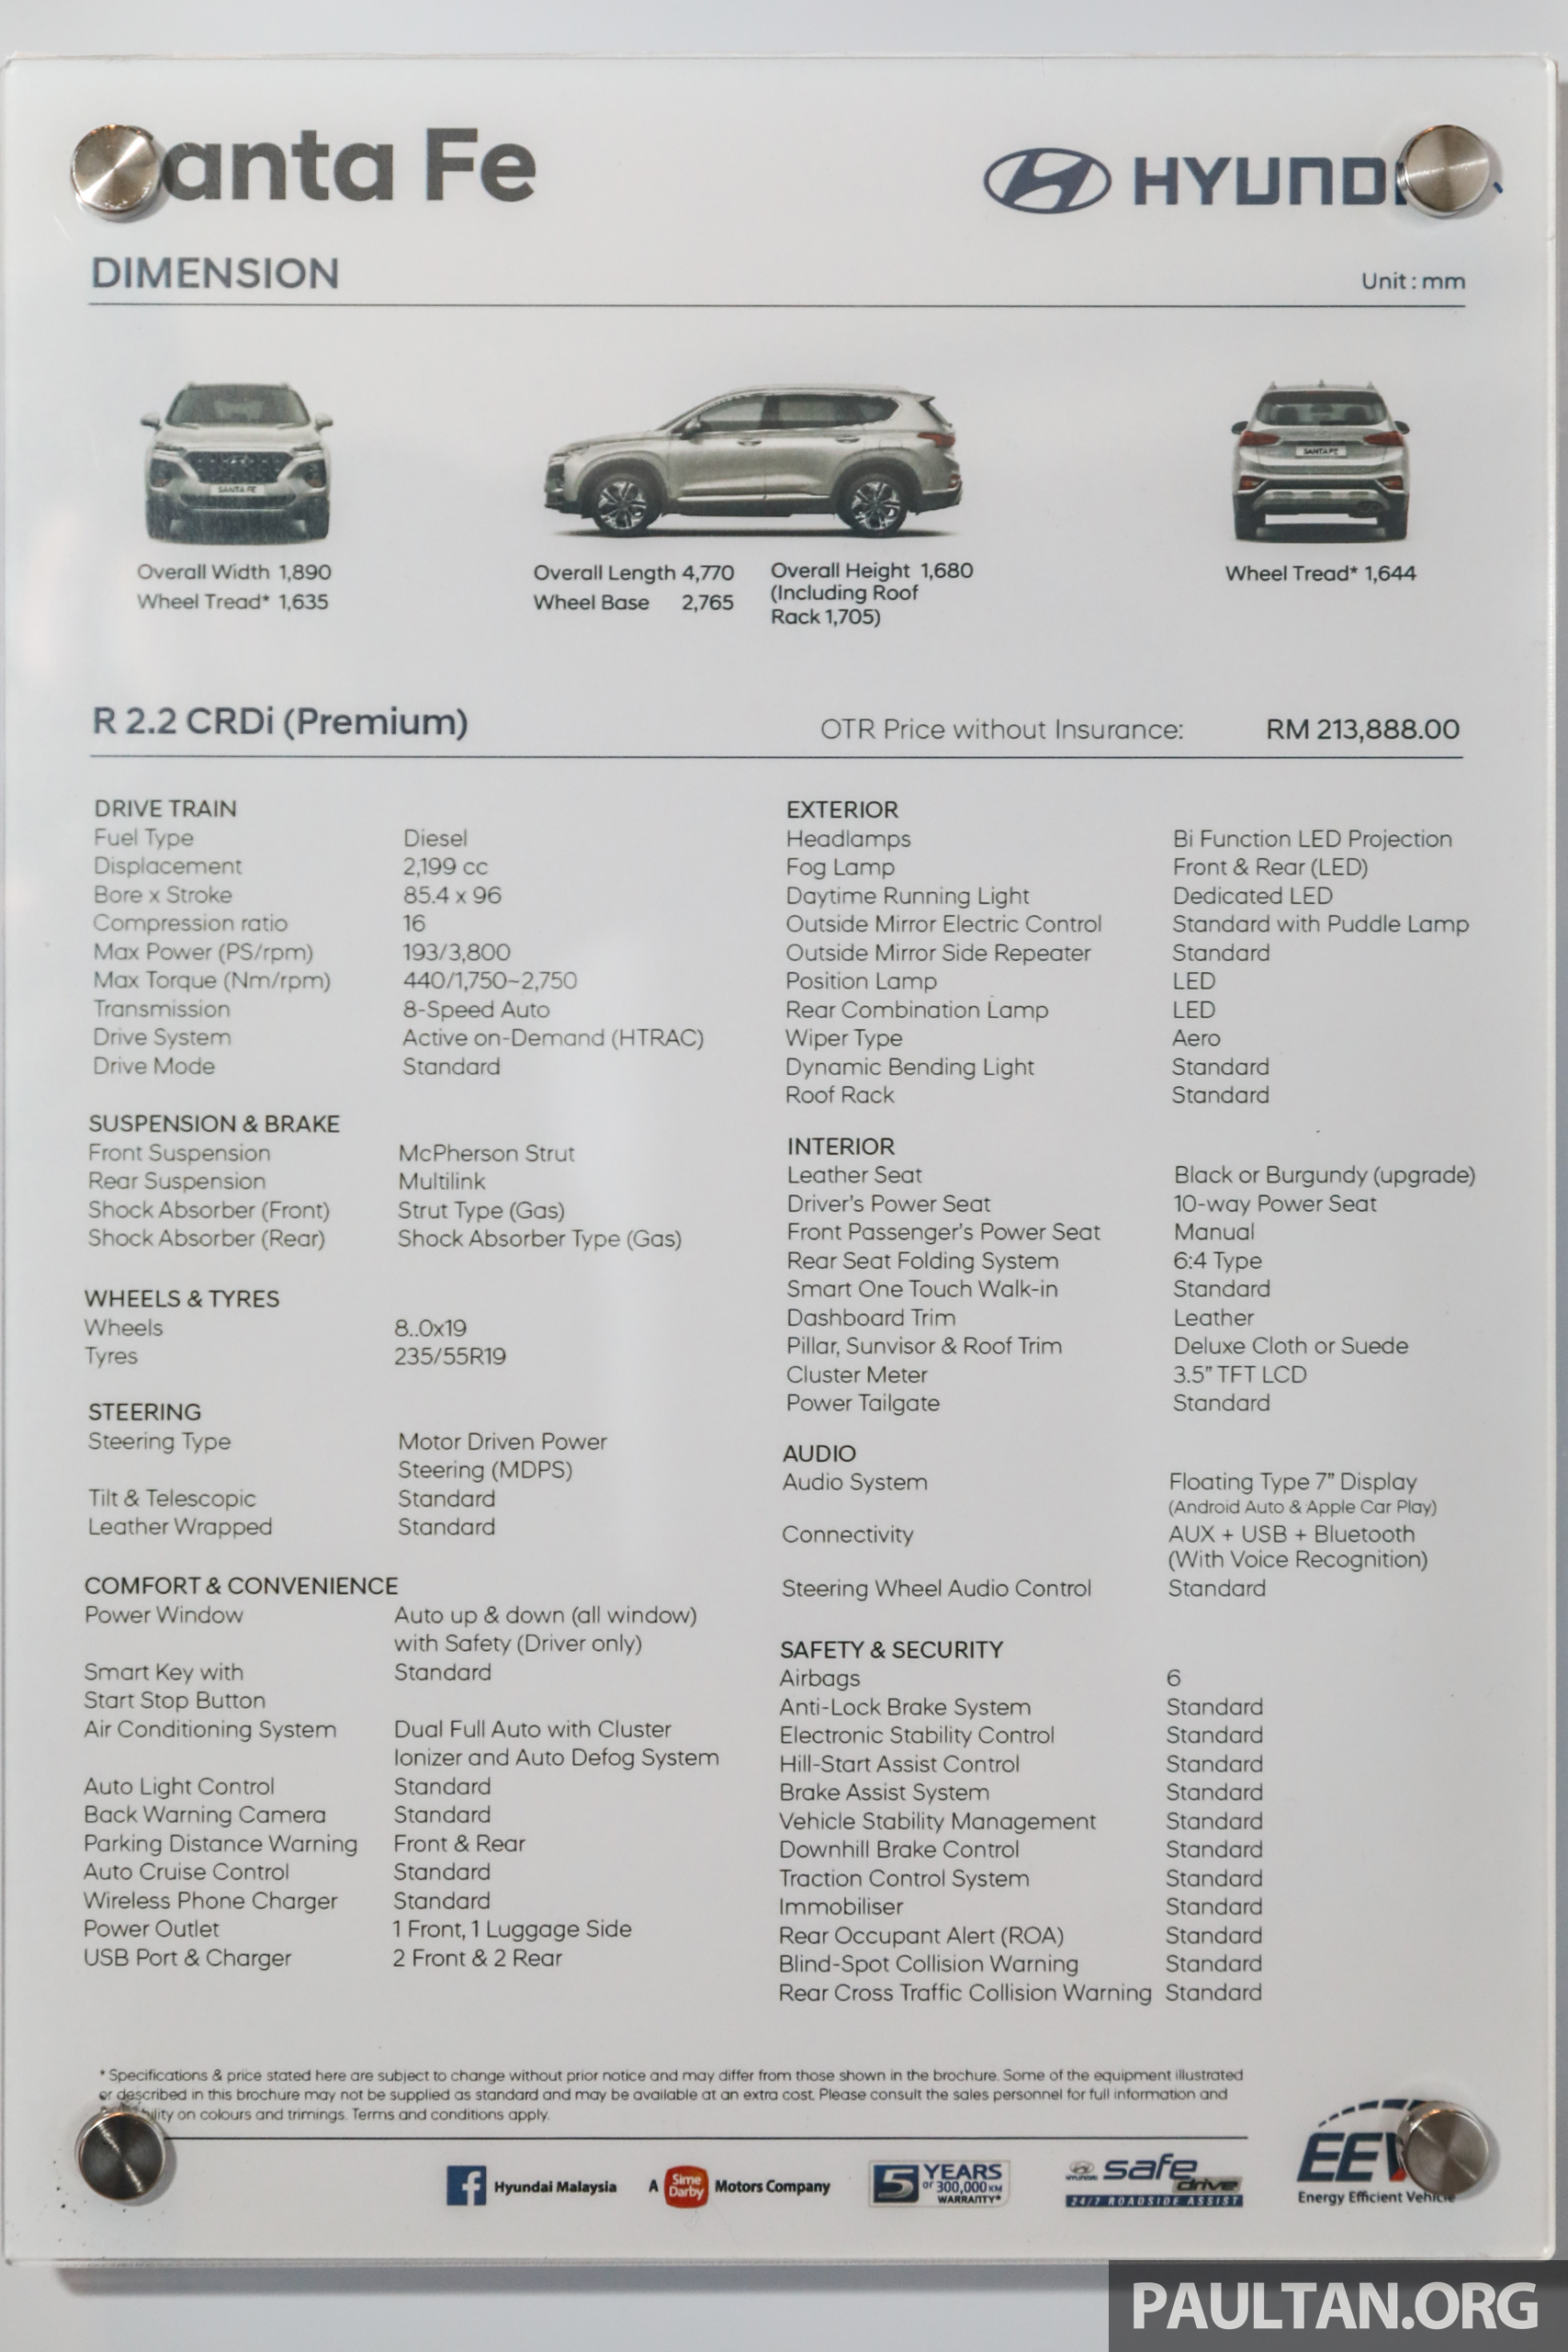 https://s3.paultan.org/image/2020/05/Hyundai-Malaysia-Santa-Fe-R-2.2-CRDi-Premium-2020_Spec-2.jpg